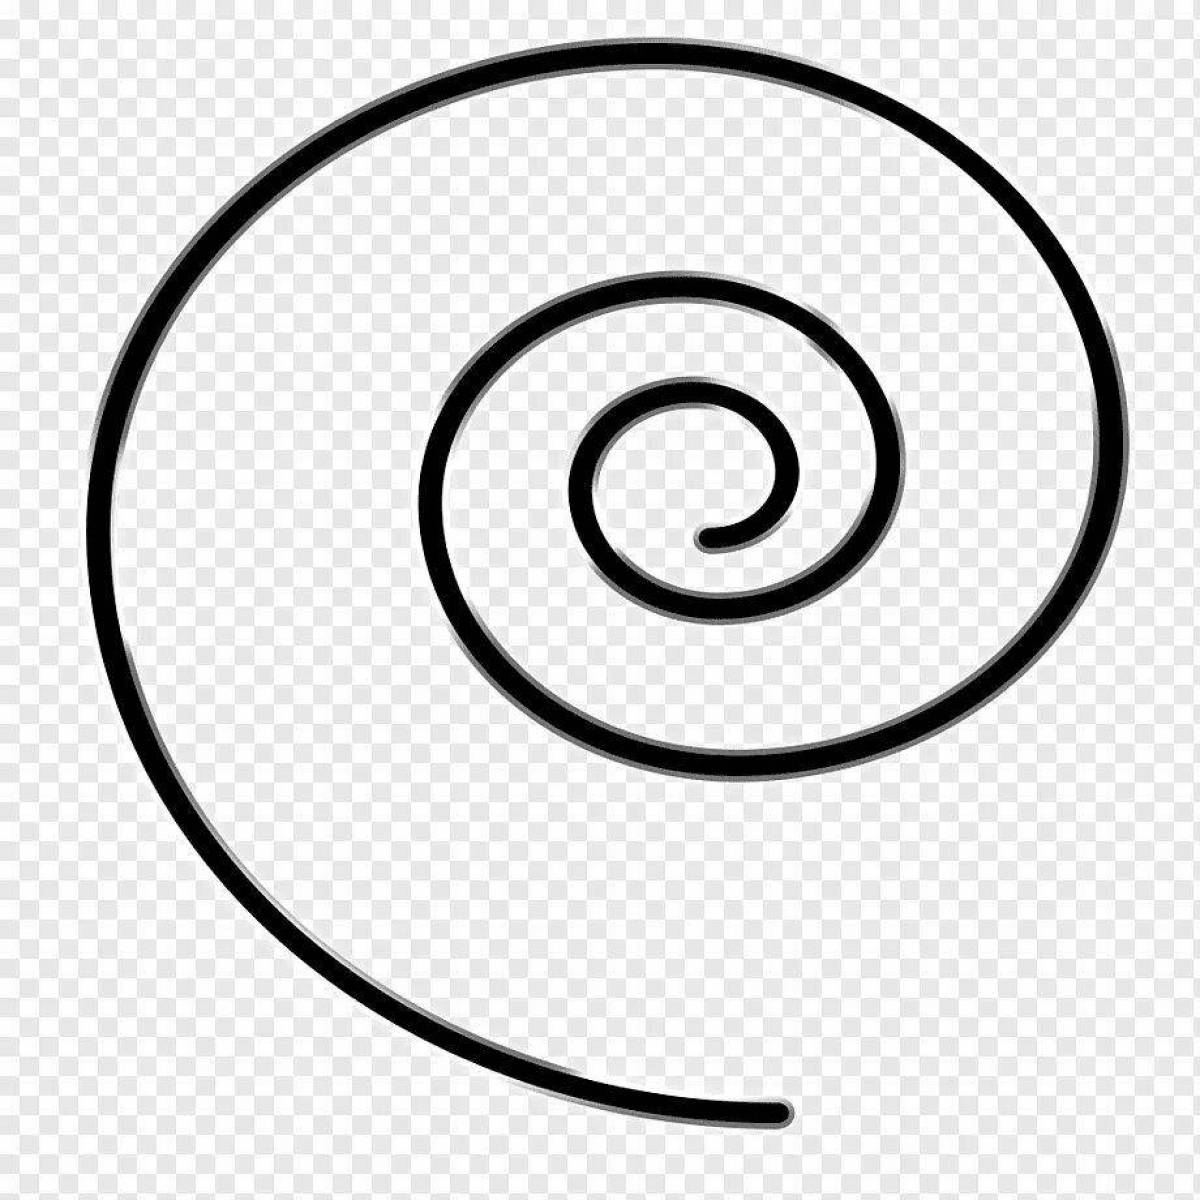 Fun spiral drawing page